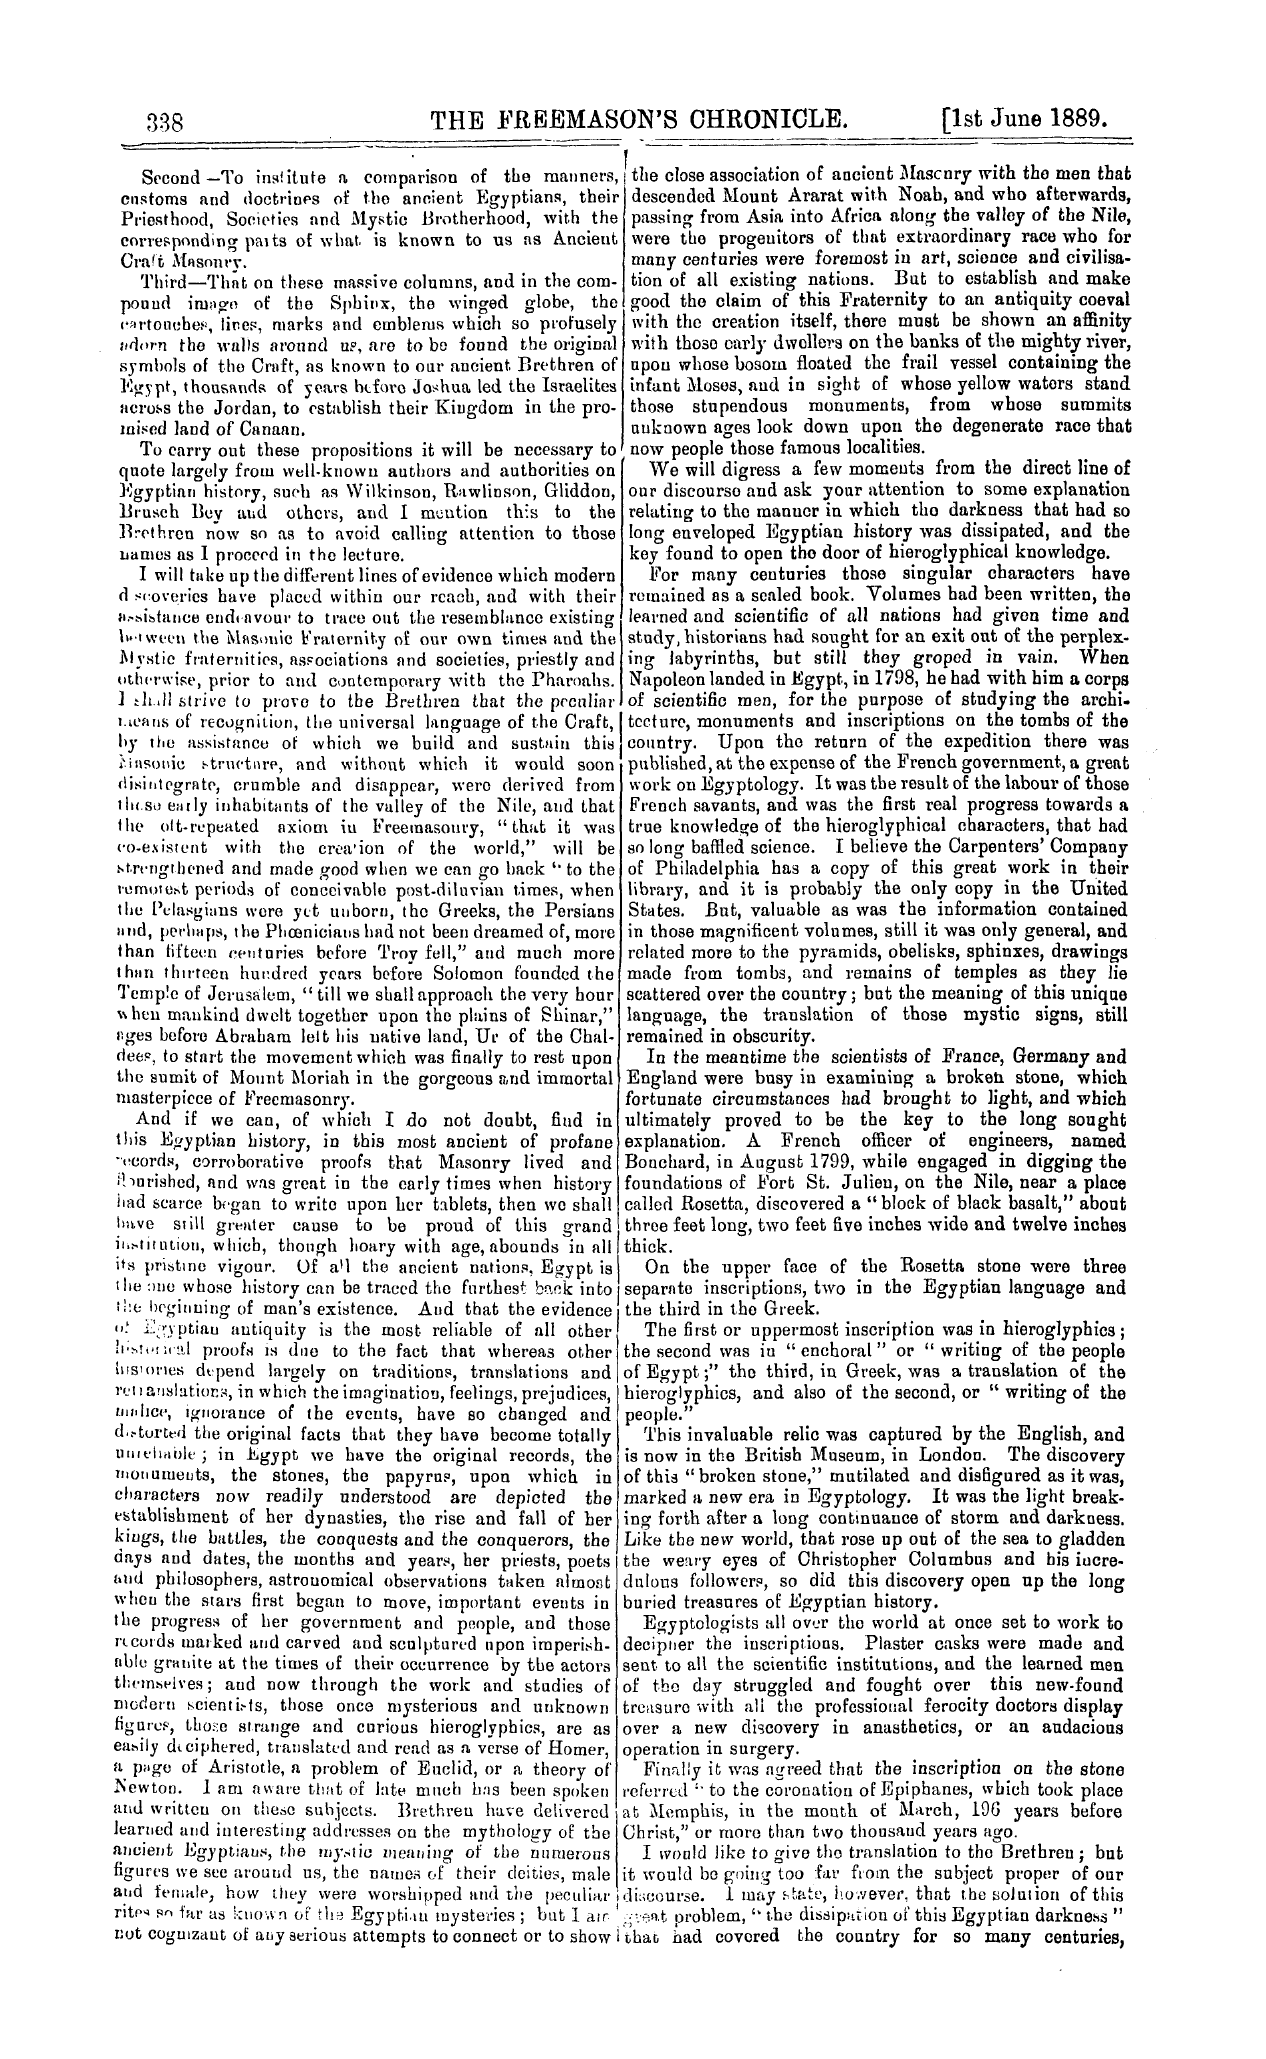 The Freemason's Chronicle: 1889-06-01: 2